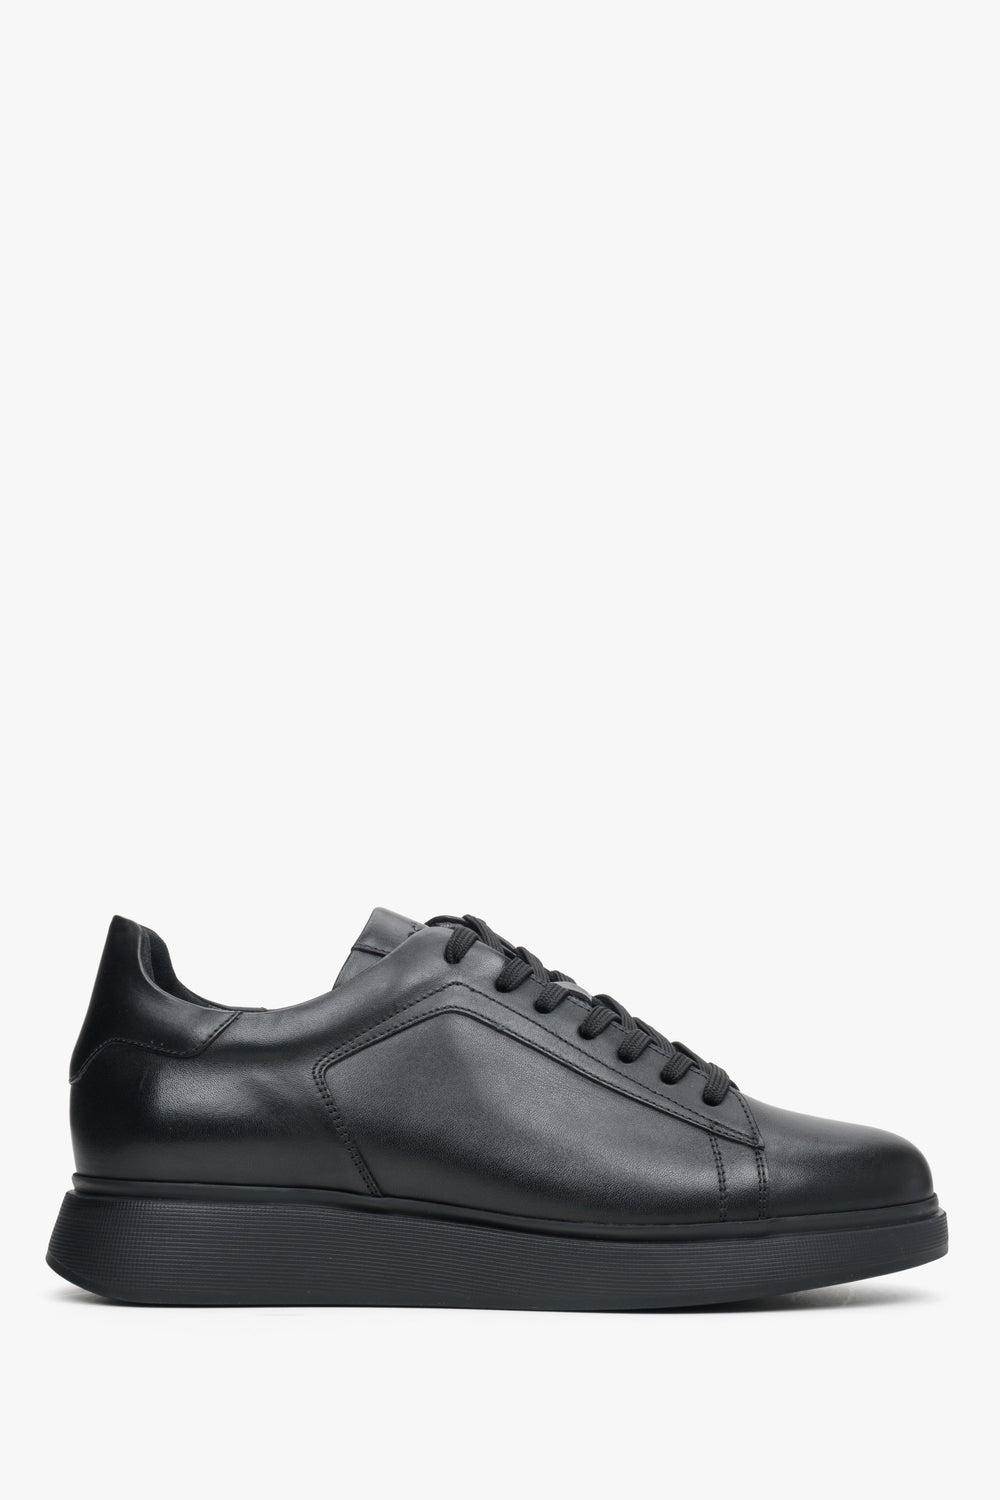 Men's Black Low Top Sneakers made of Genuine Leather Estro ER00113795.